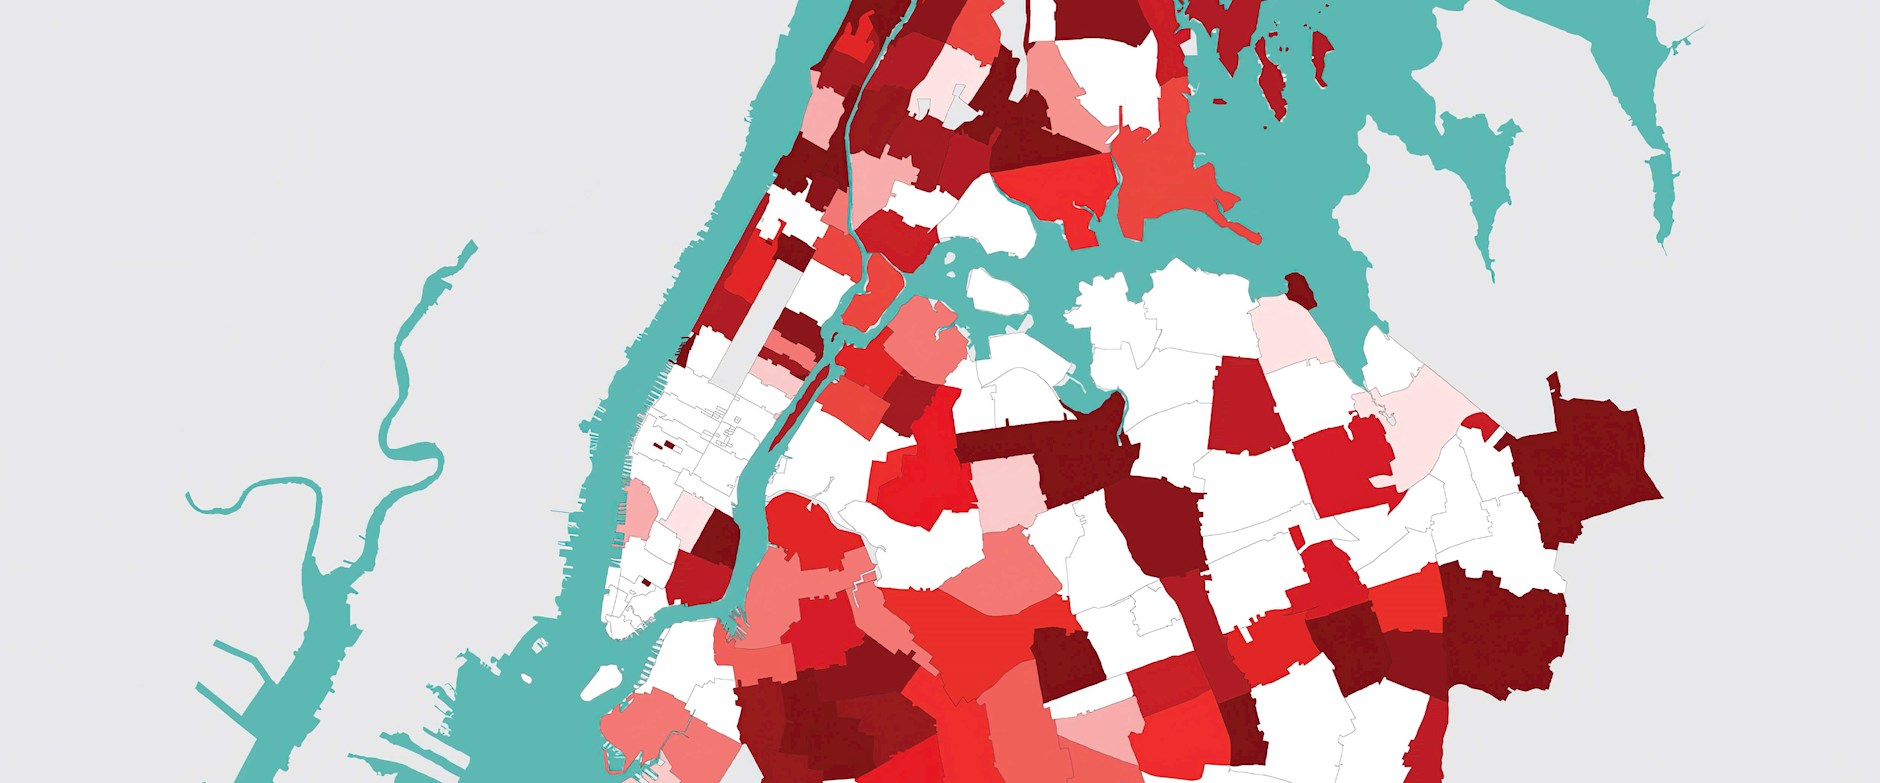 Covid-19 pandemic map of New York City neighborhoods